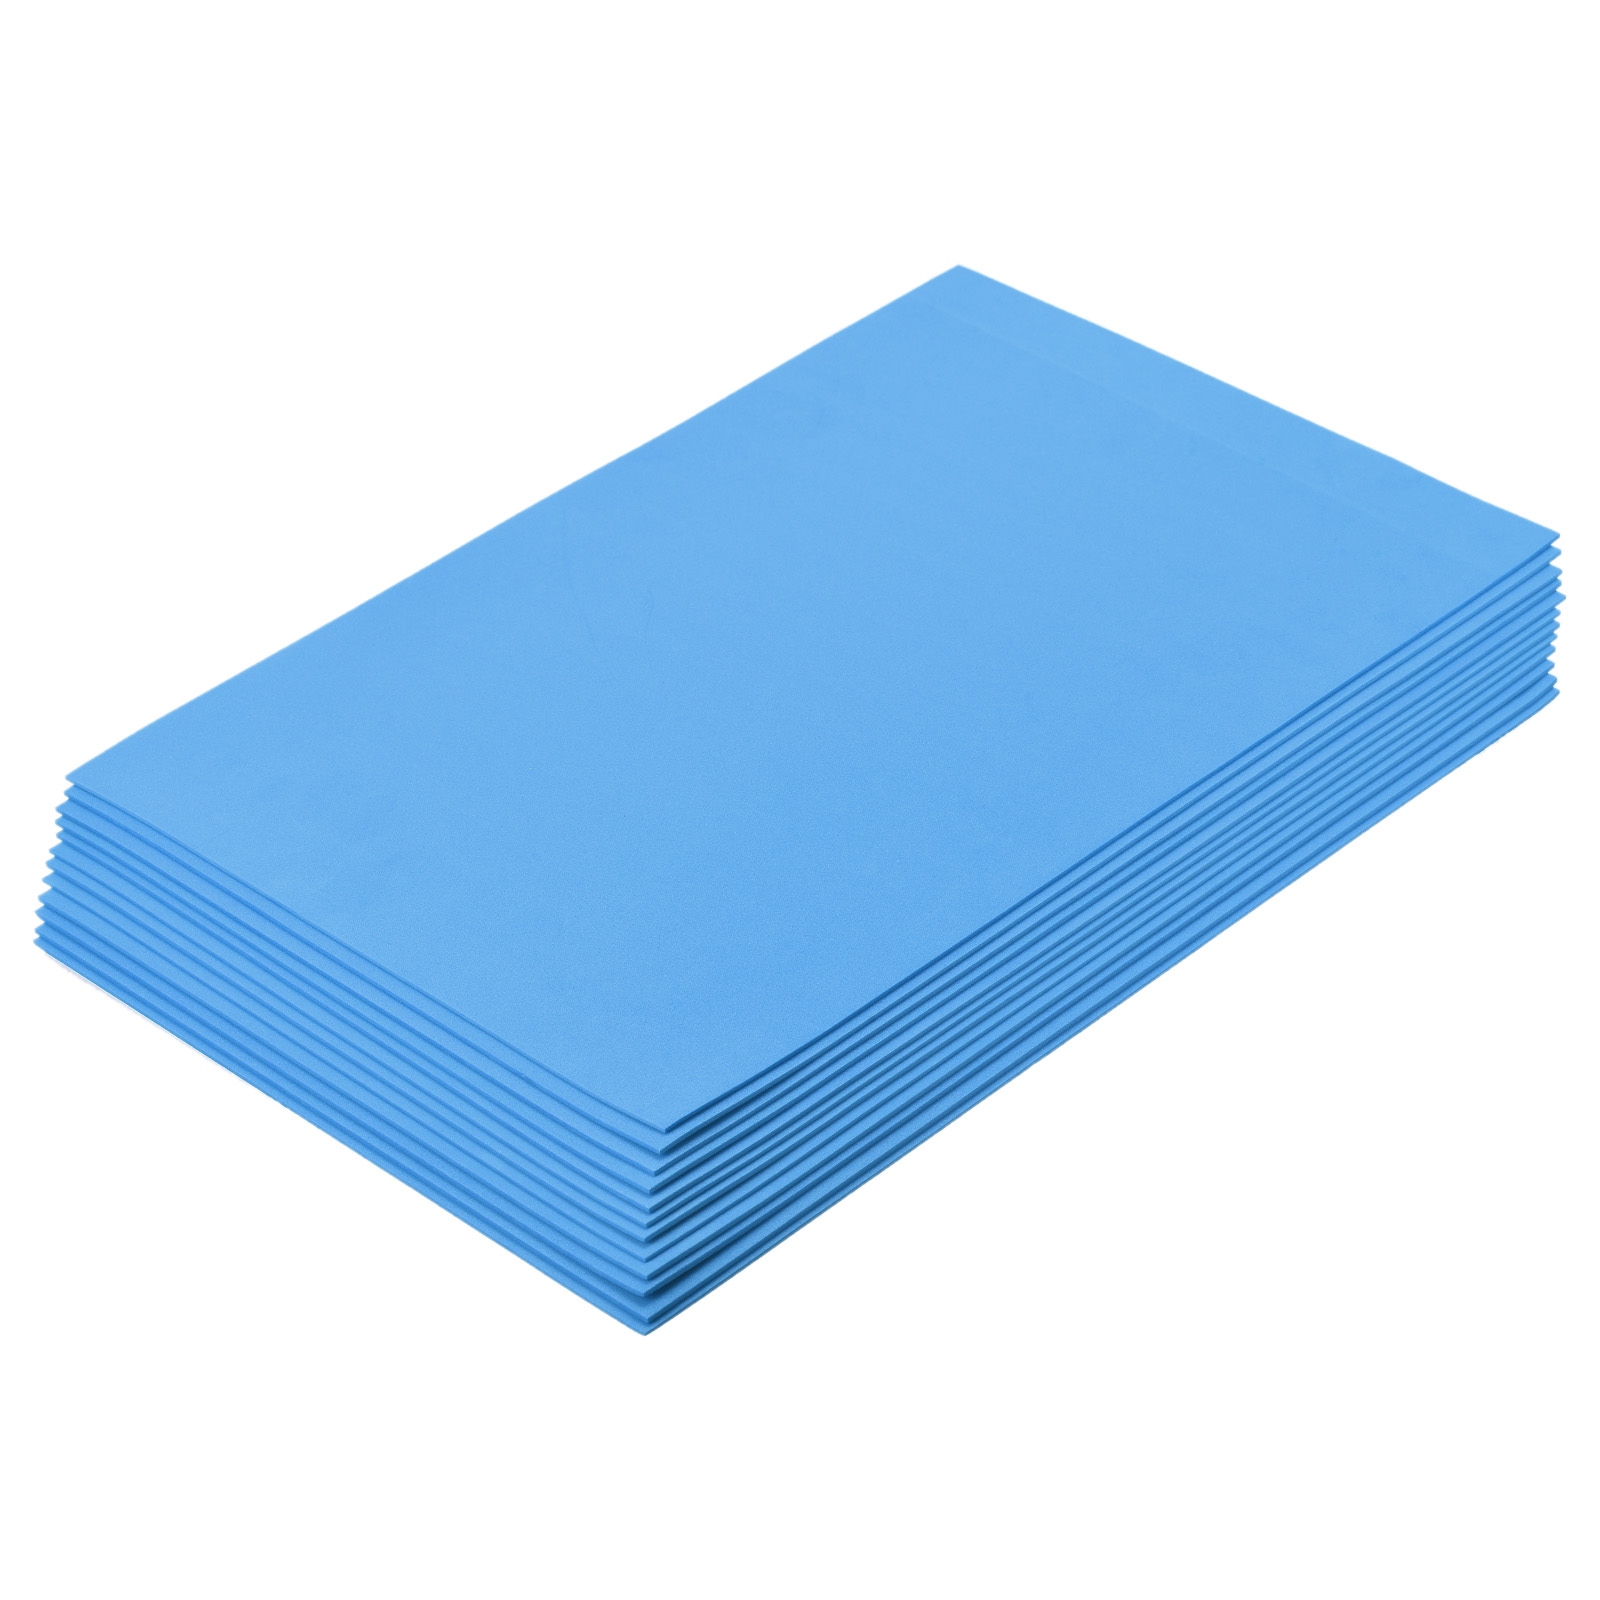 EVA Foam Sheets 17.72 x 11.81 Inch 2mm Thickness for DIY, 12 Pcs - Bed Bath  & Beyond - 37253726